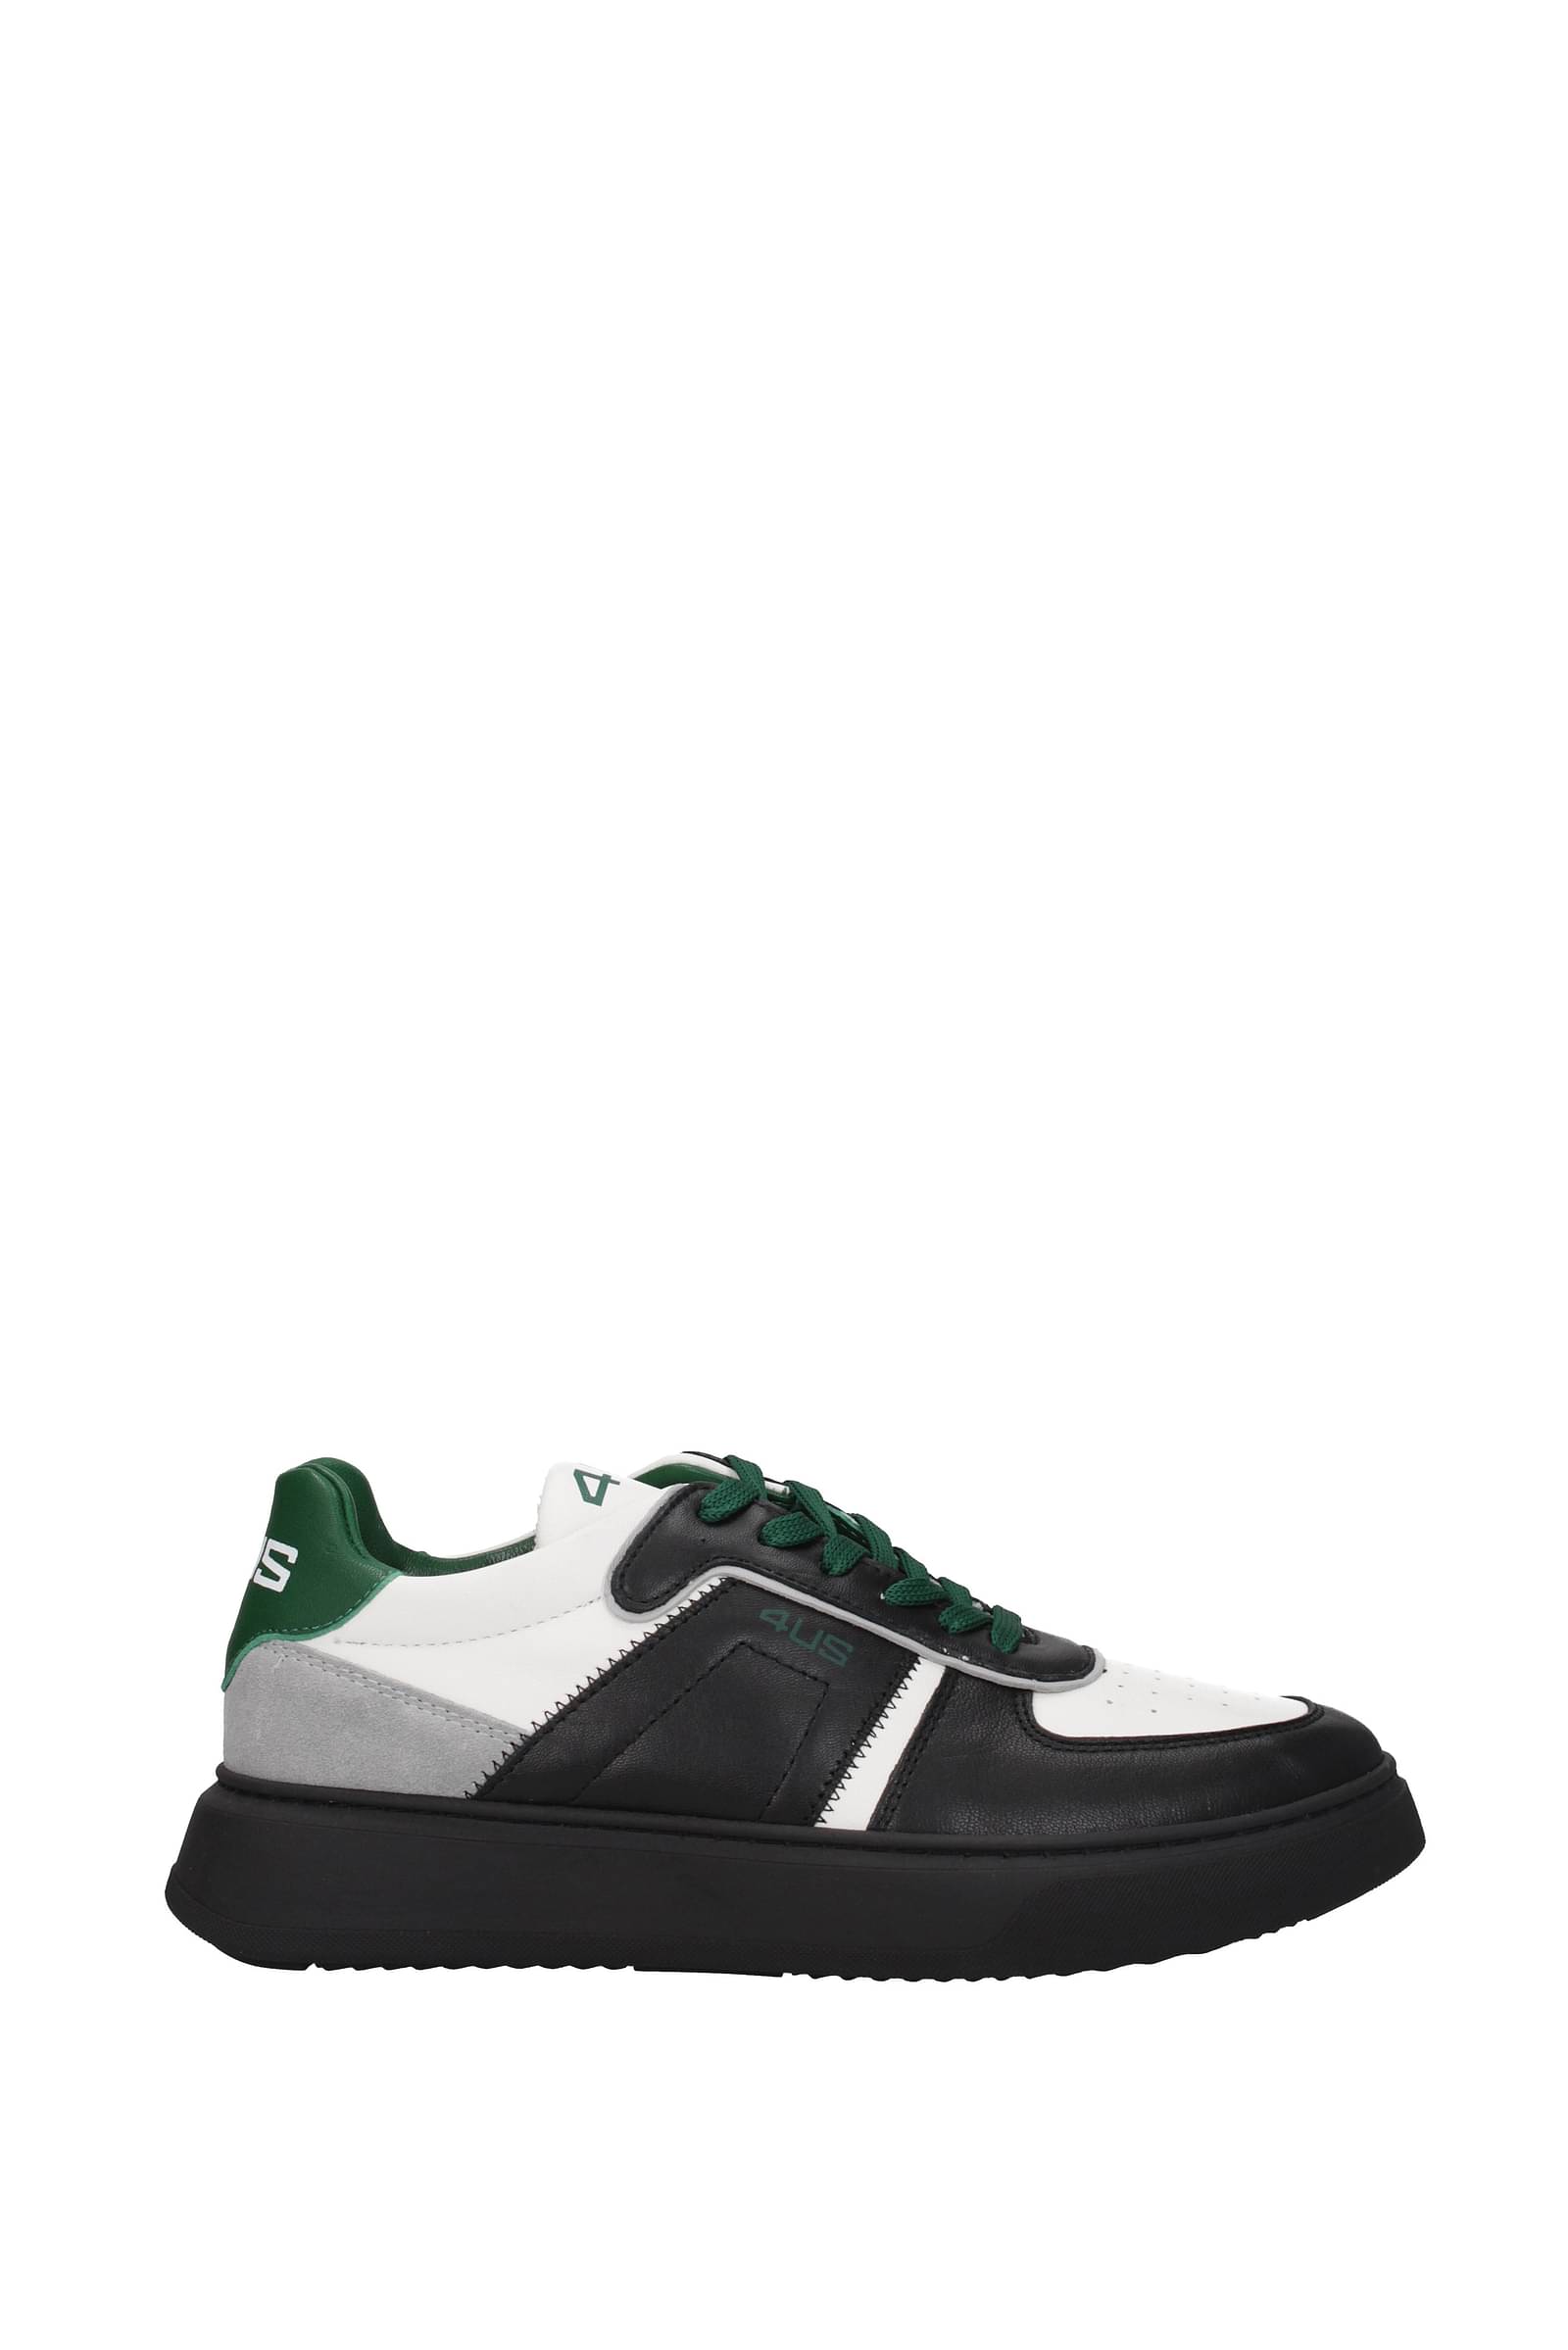 Buy DIESEL Men Grey Leather Sneakers - Casual Shoes for Men 2070768 | Myntra